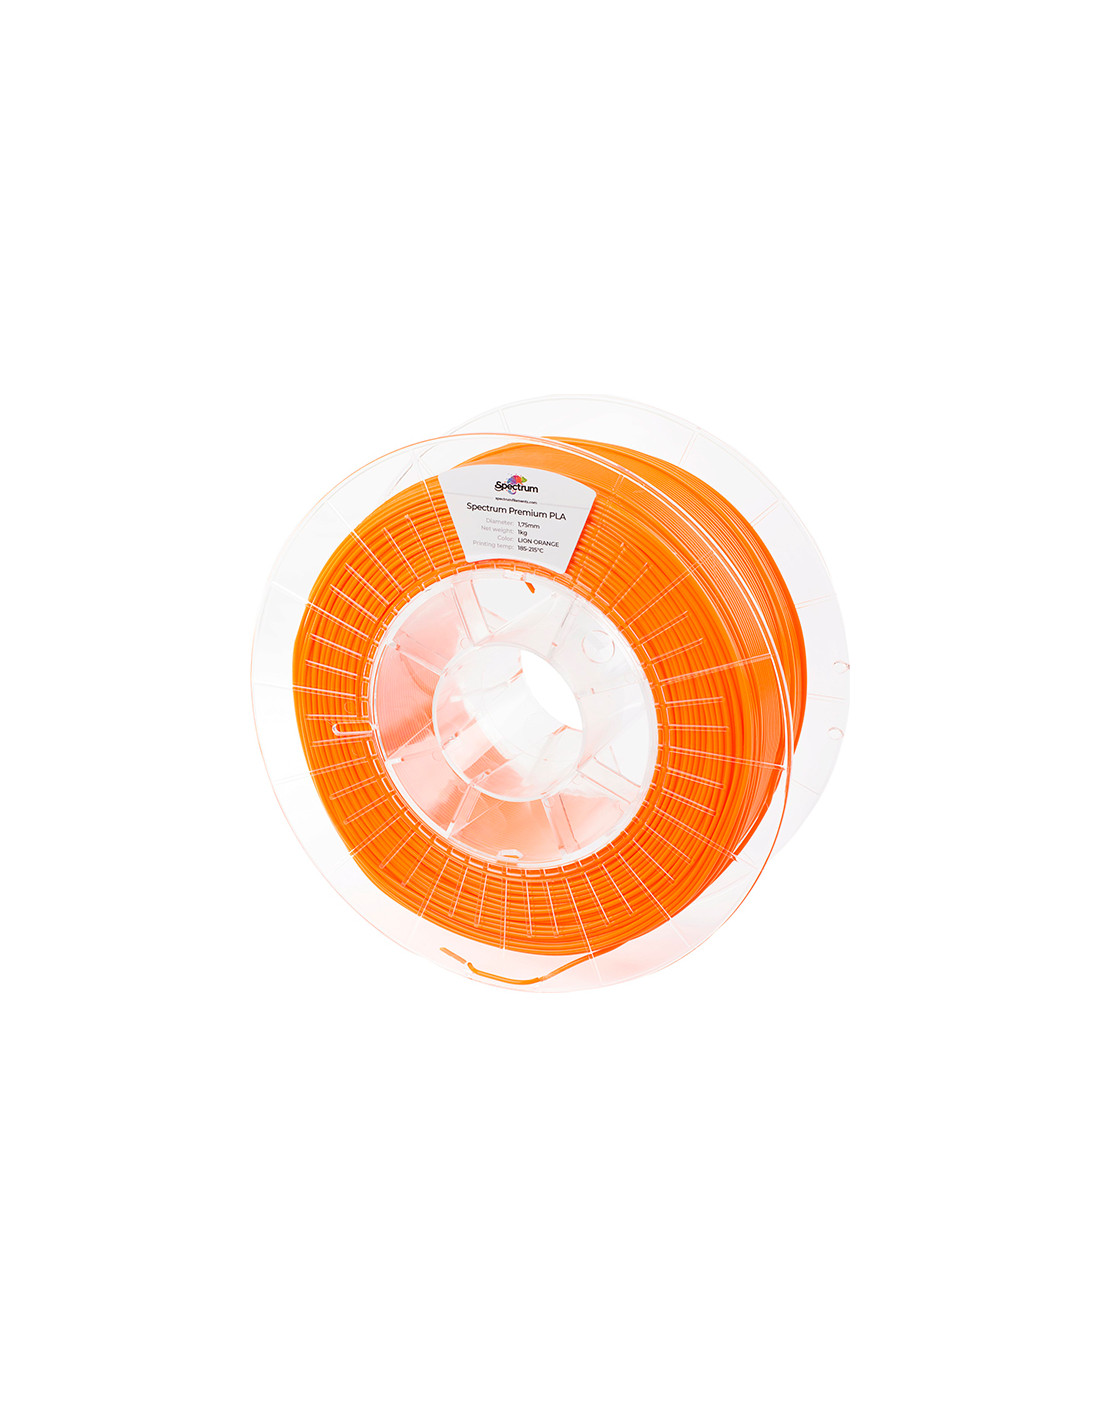 Filamento PLA Spectrum 1,75 mm Naranja Leon (1kg)